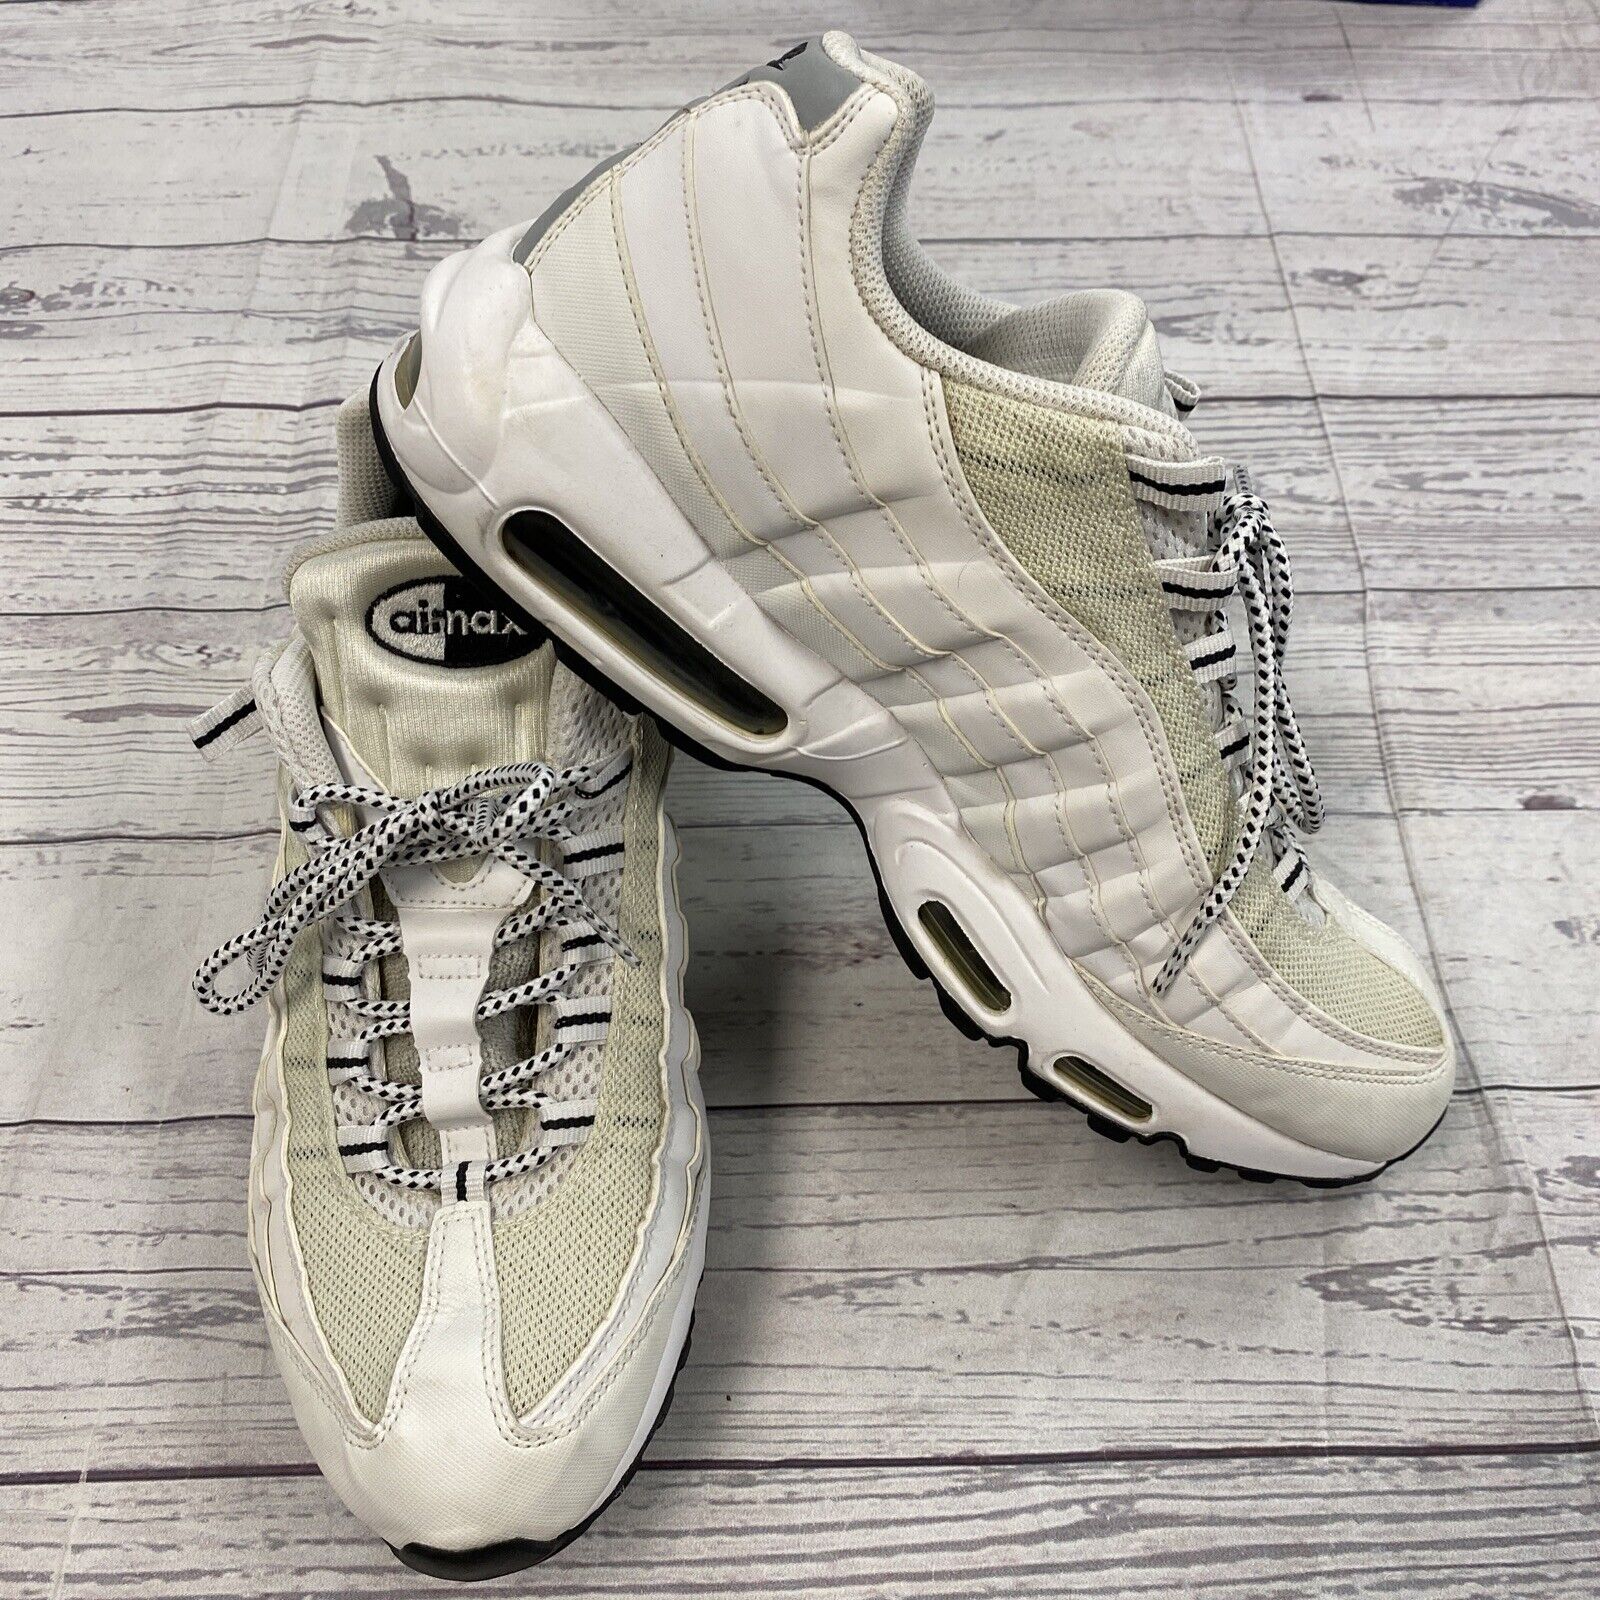 Nike 609048-109 Air Max 95 Triple White Black Running Shoes Men’s Size 13*